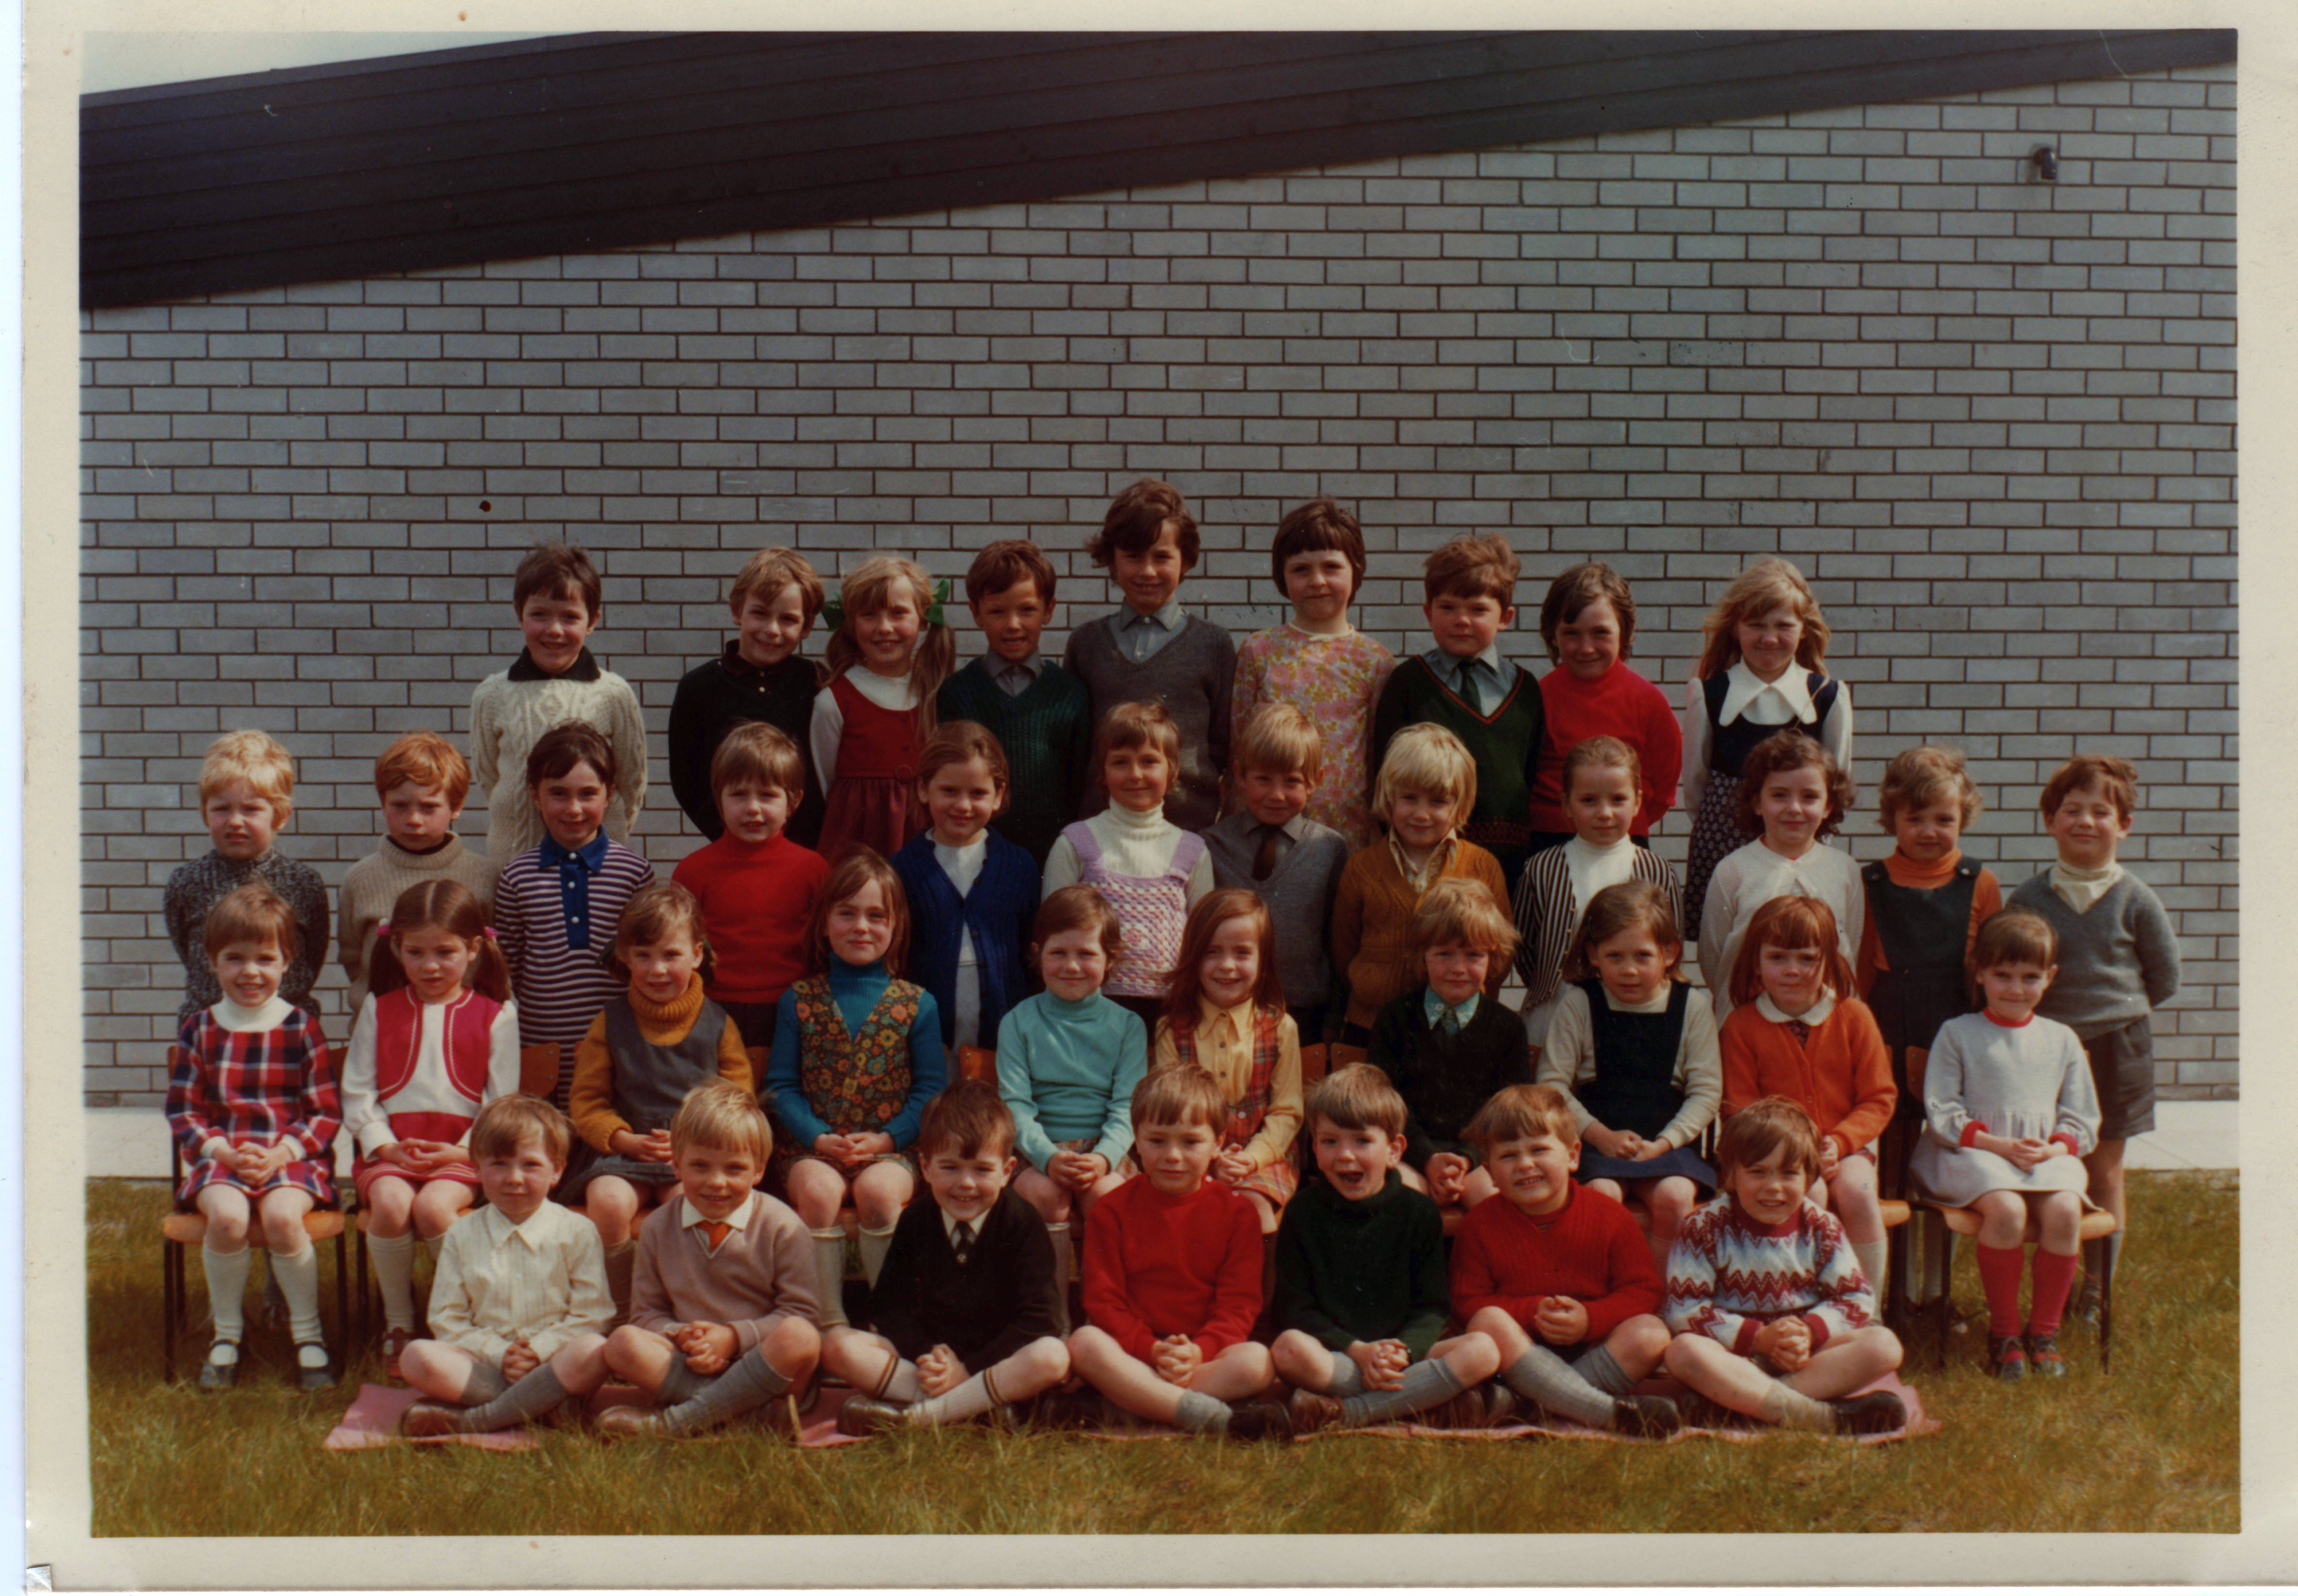 Rachel Cropper at St Michael School 1971 